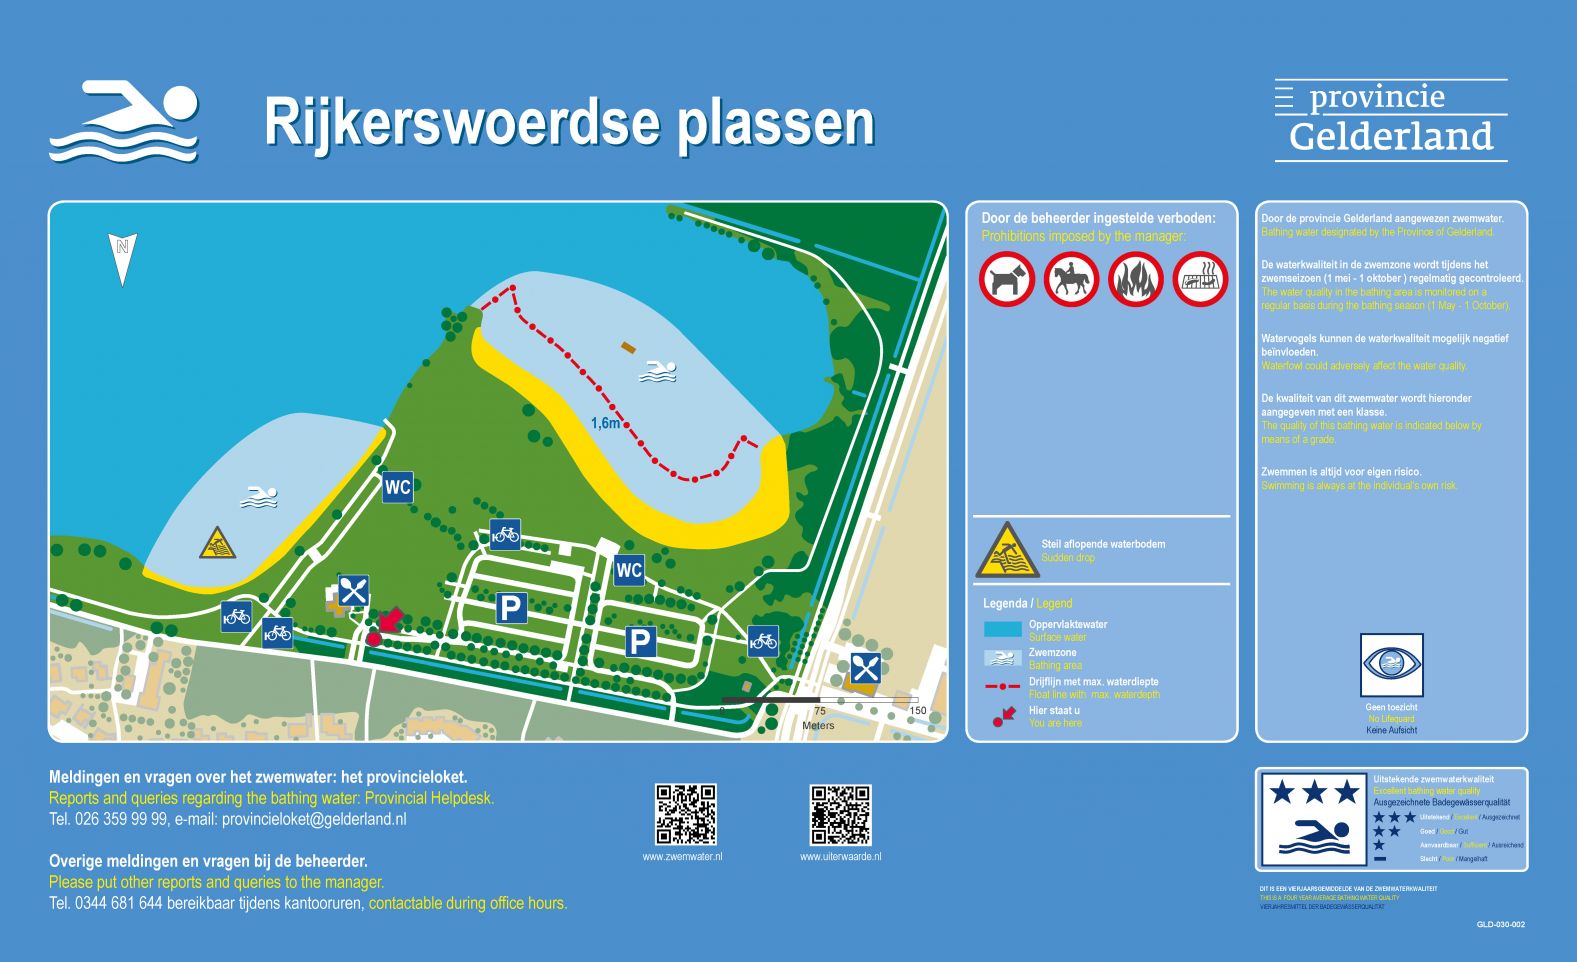 The information board at the swimming location De Rijkerswoerdse Plassen